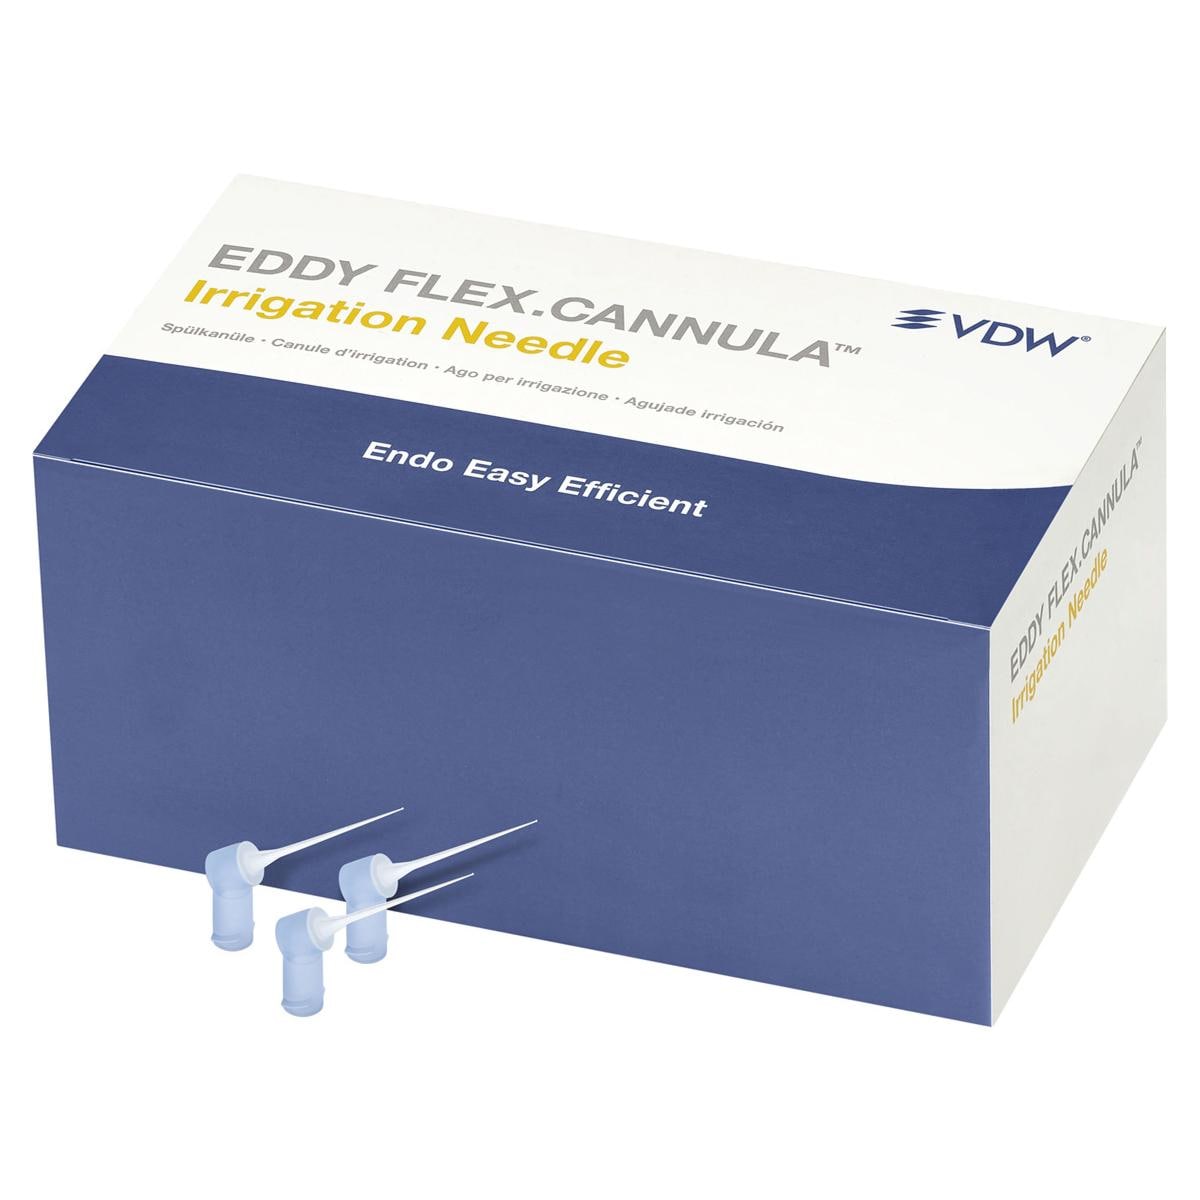 EDDY® FLEX.CANNULA - Packung 40 Stück